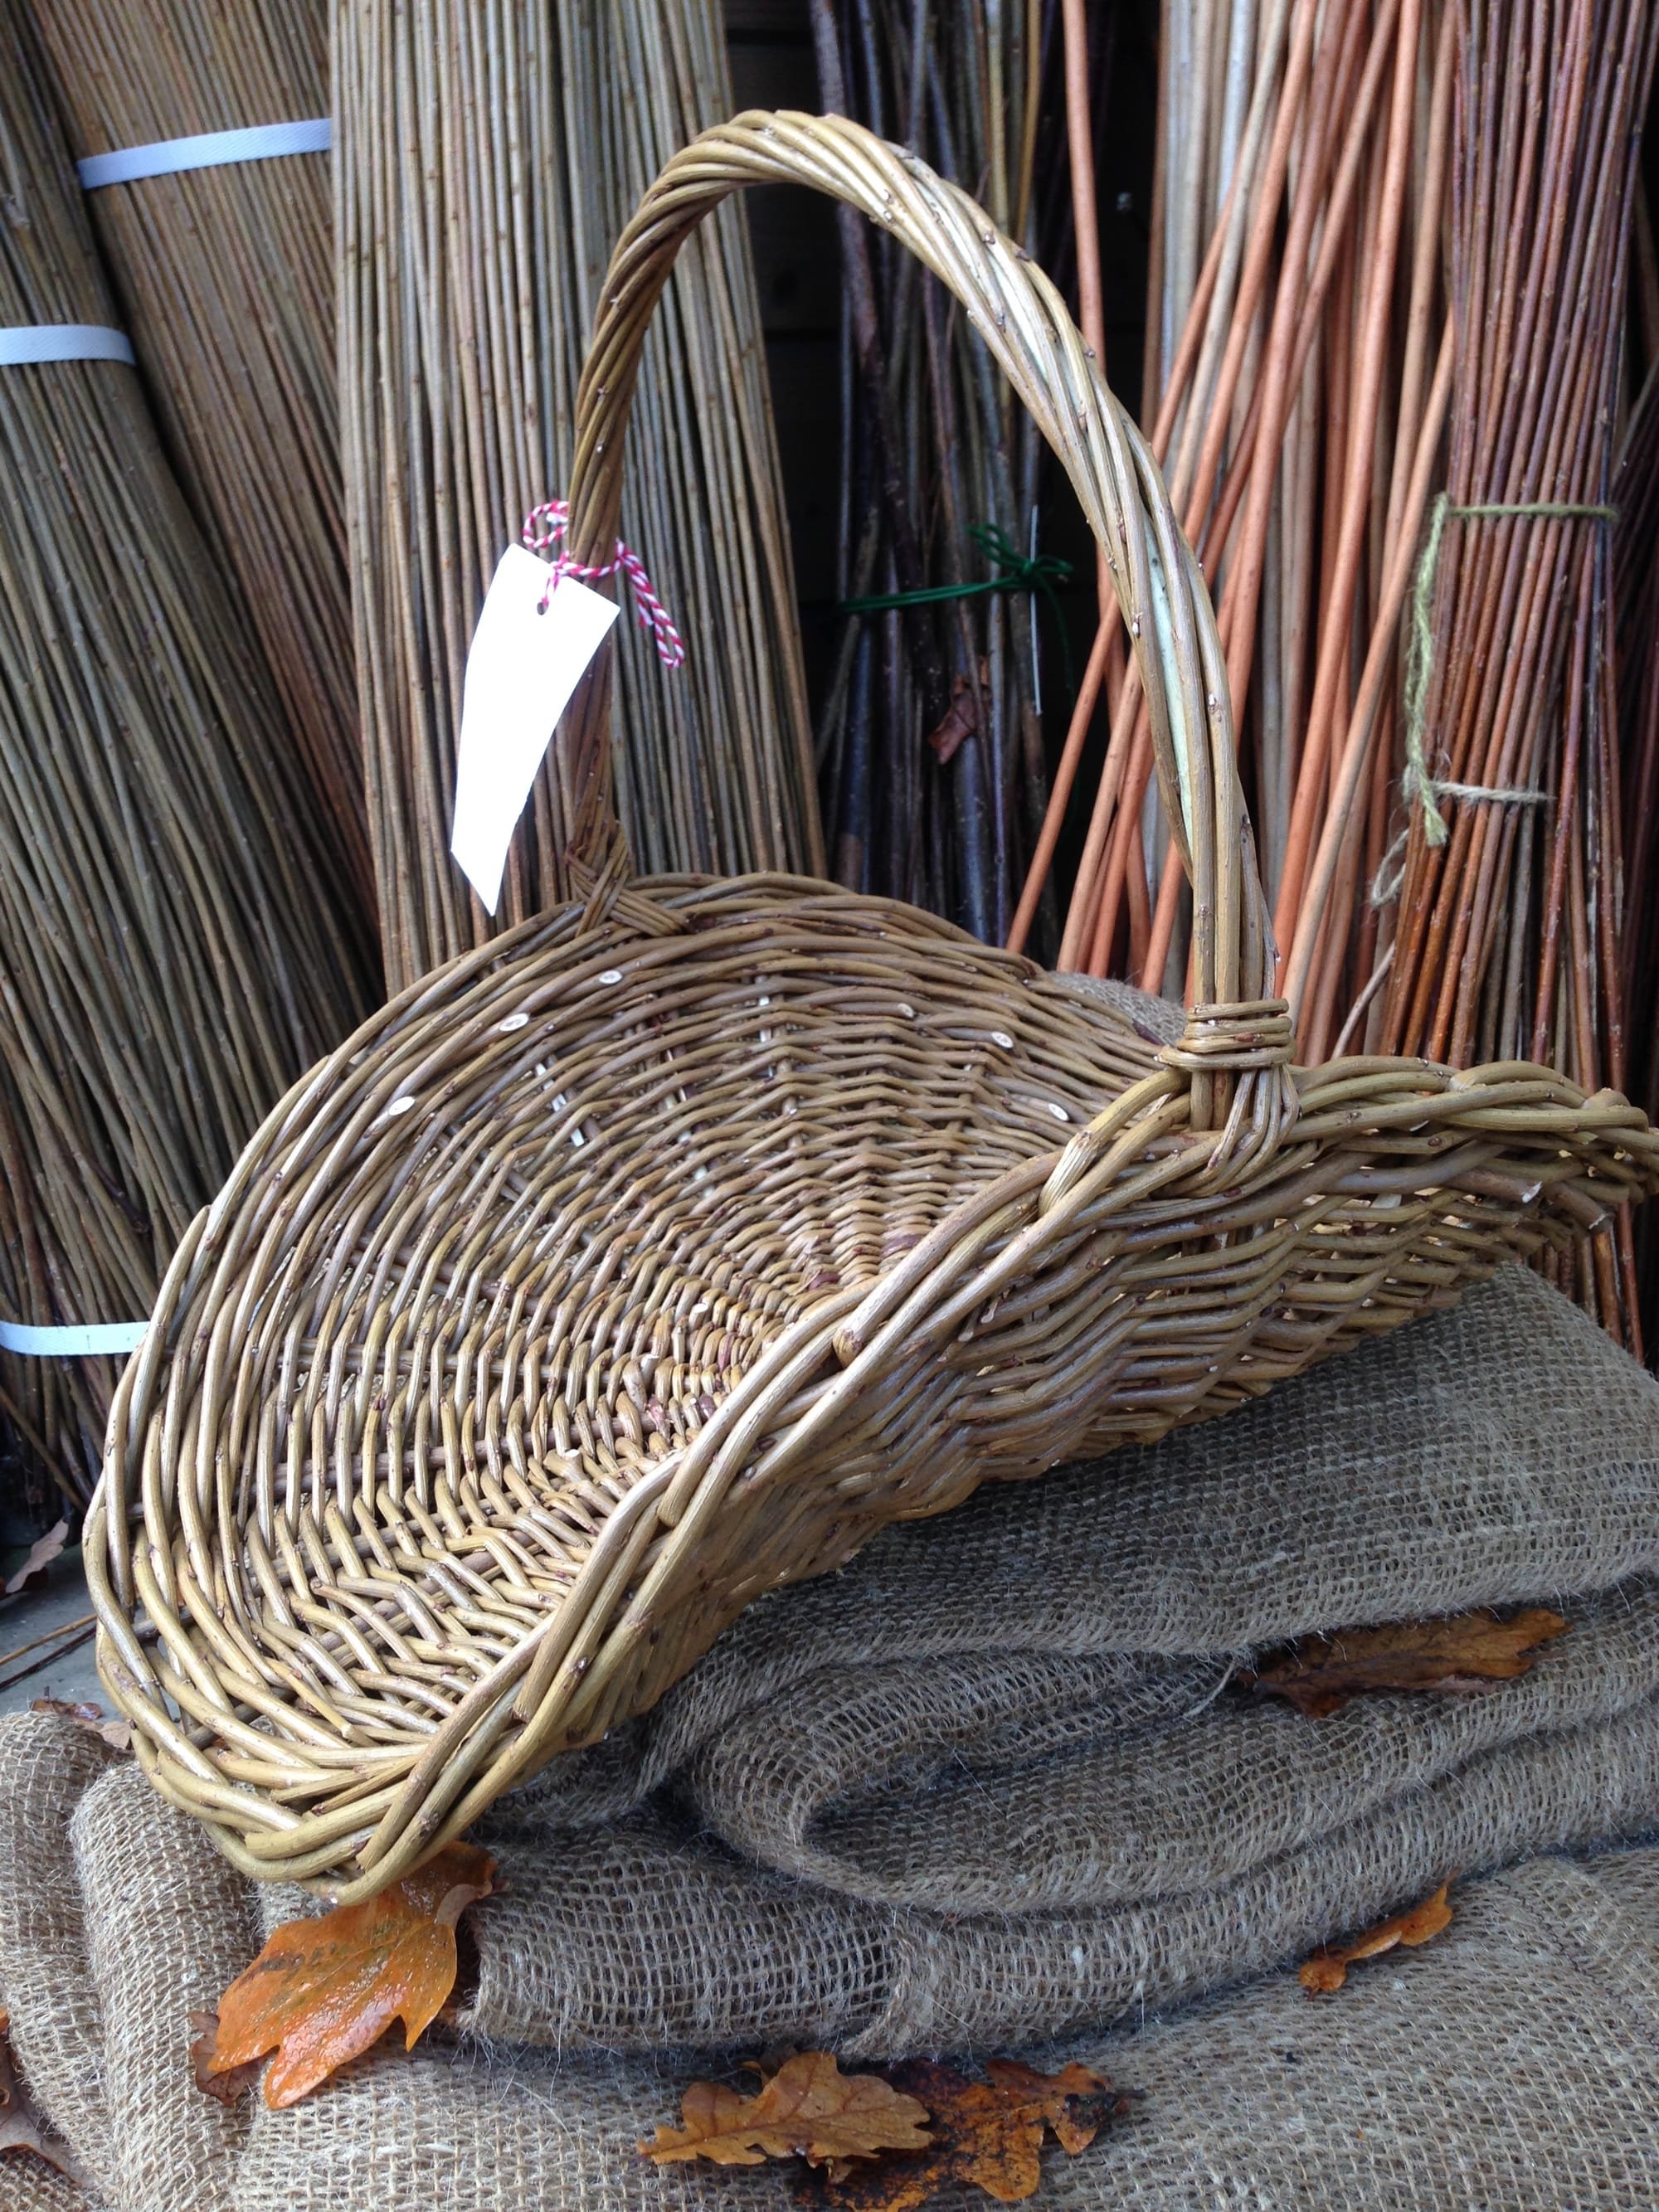 Traditional Flower Basket